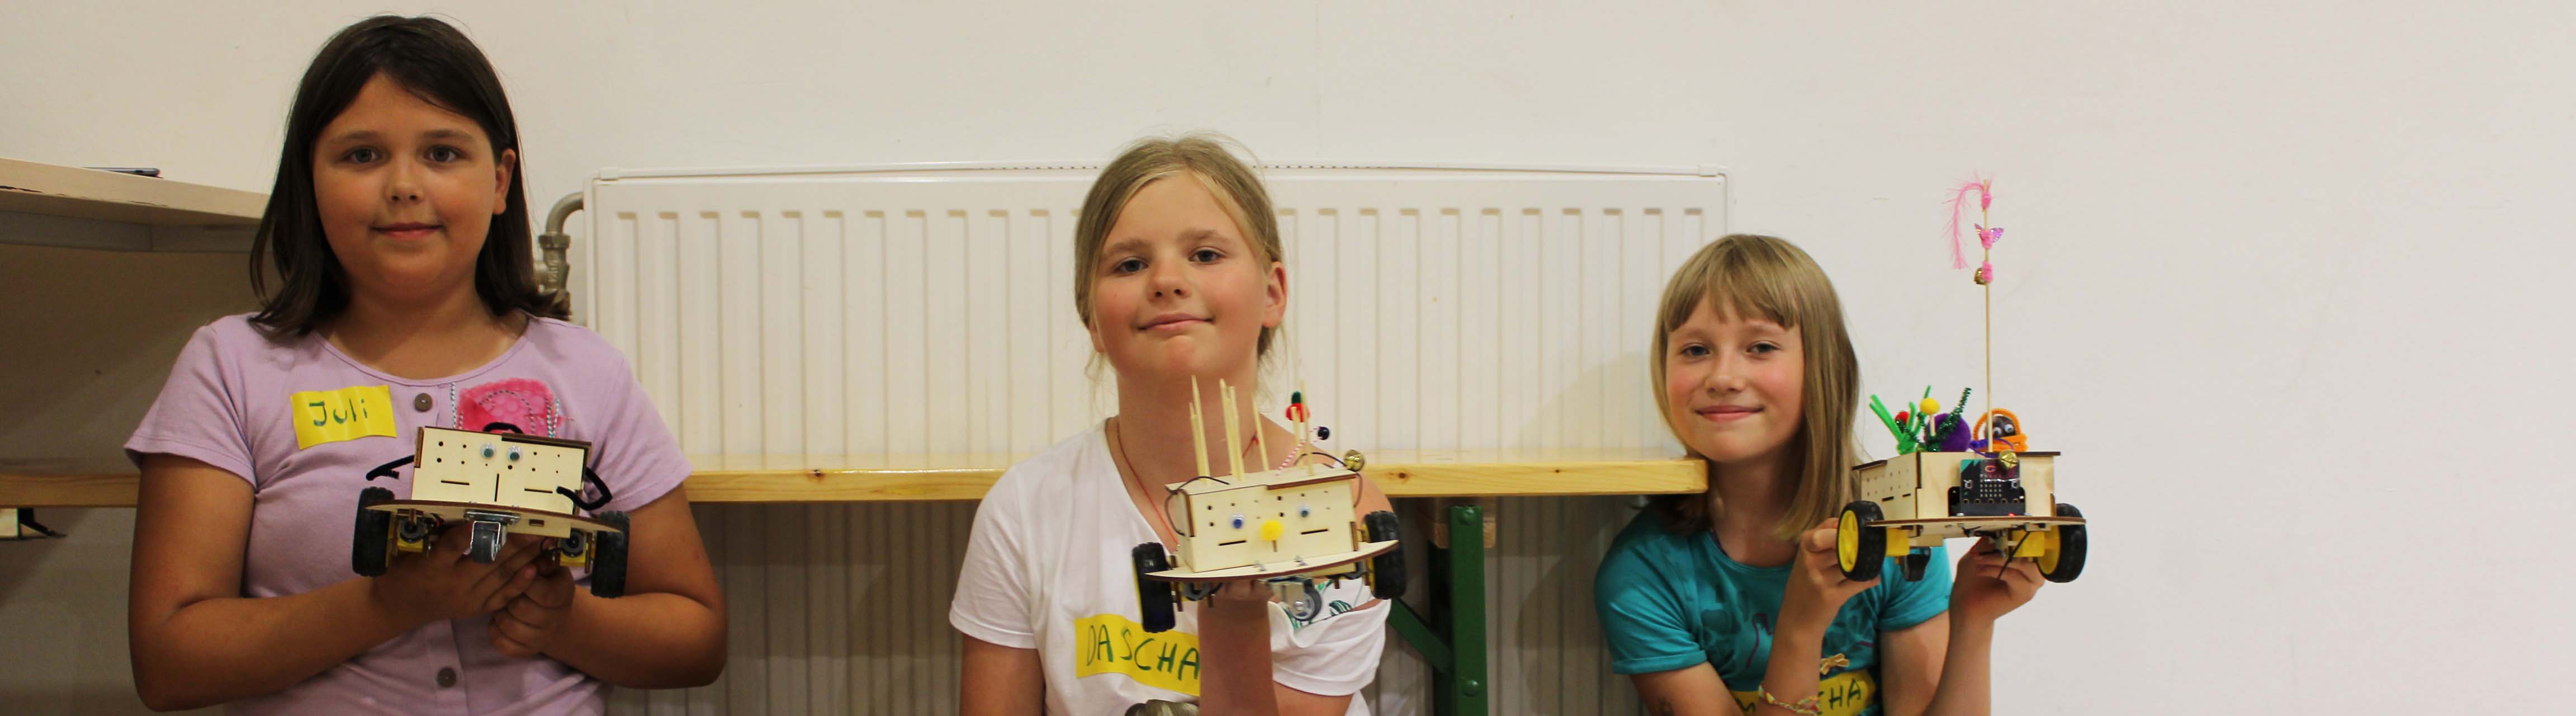 Drei Mädchen präsentieren ihre selbst gebauten Roboter, Robo4earth, ZIMD